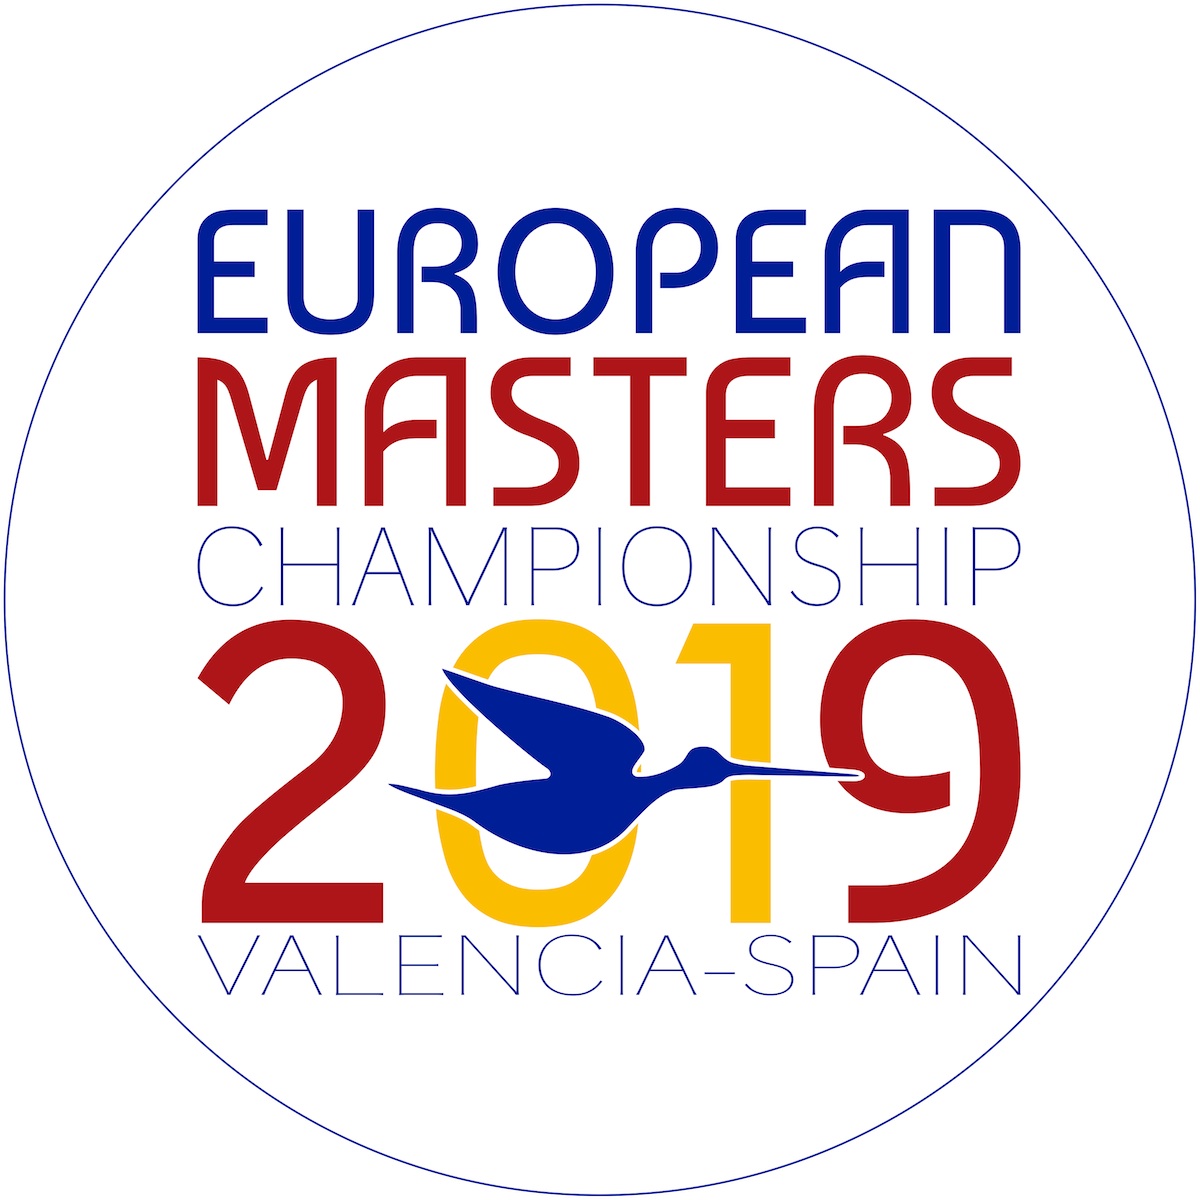 European Masters Championship Image